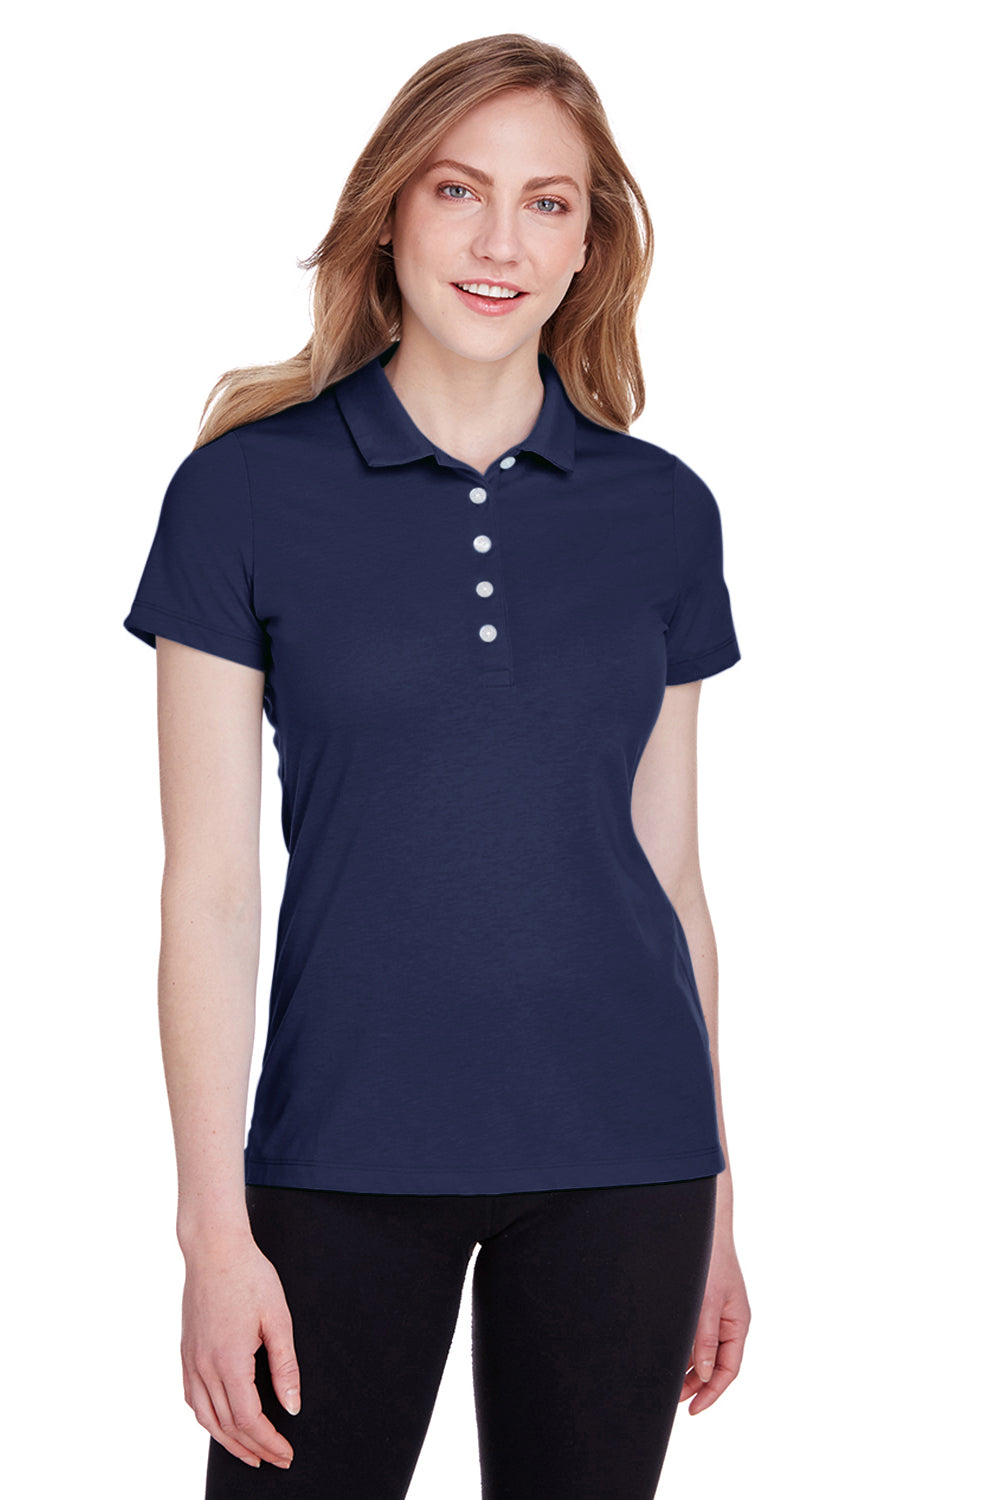 Puma 596921 Womens Fusion Performance Moisture Wicking Short Sleeve Polo Shirt Navy Blue Front